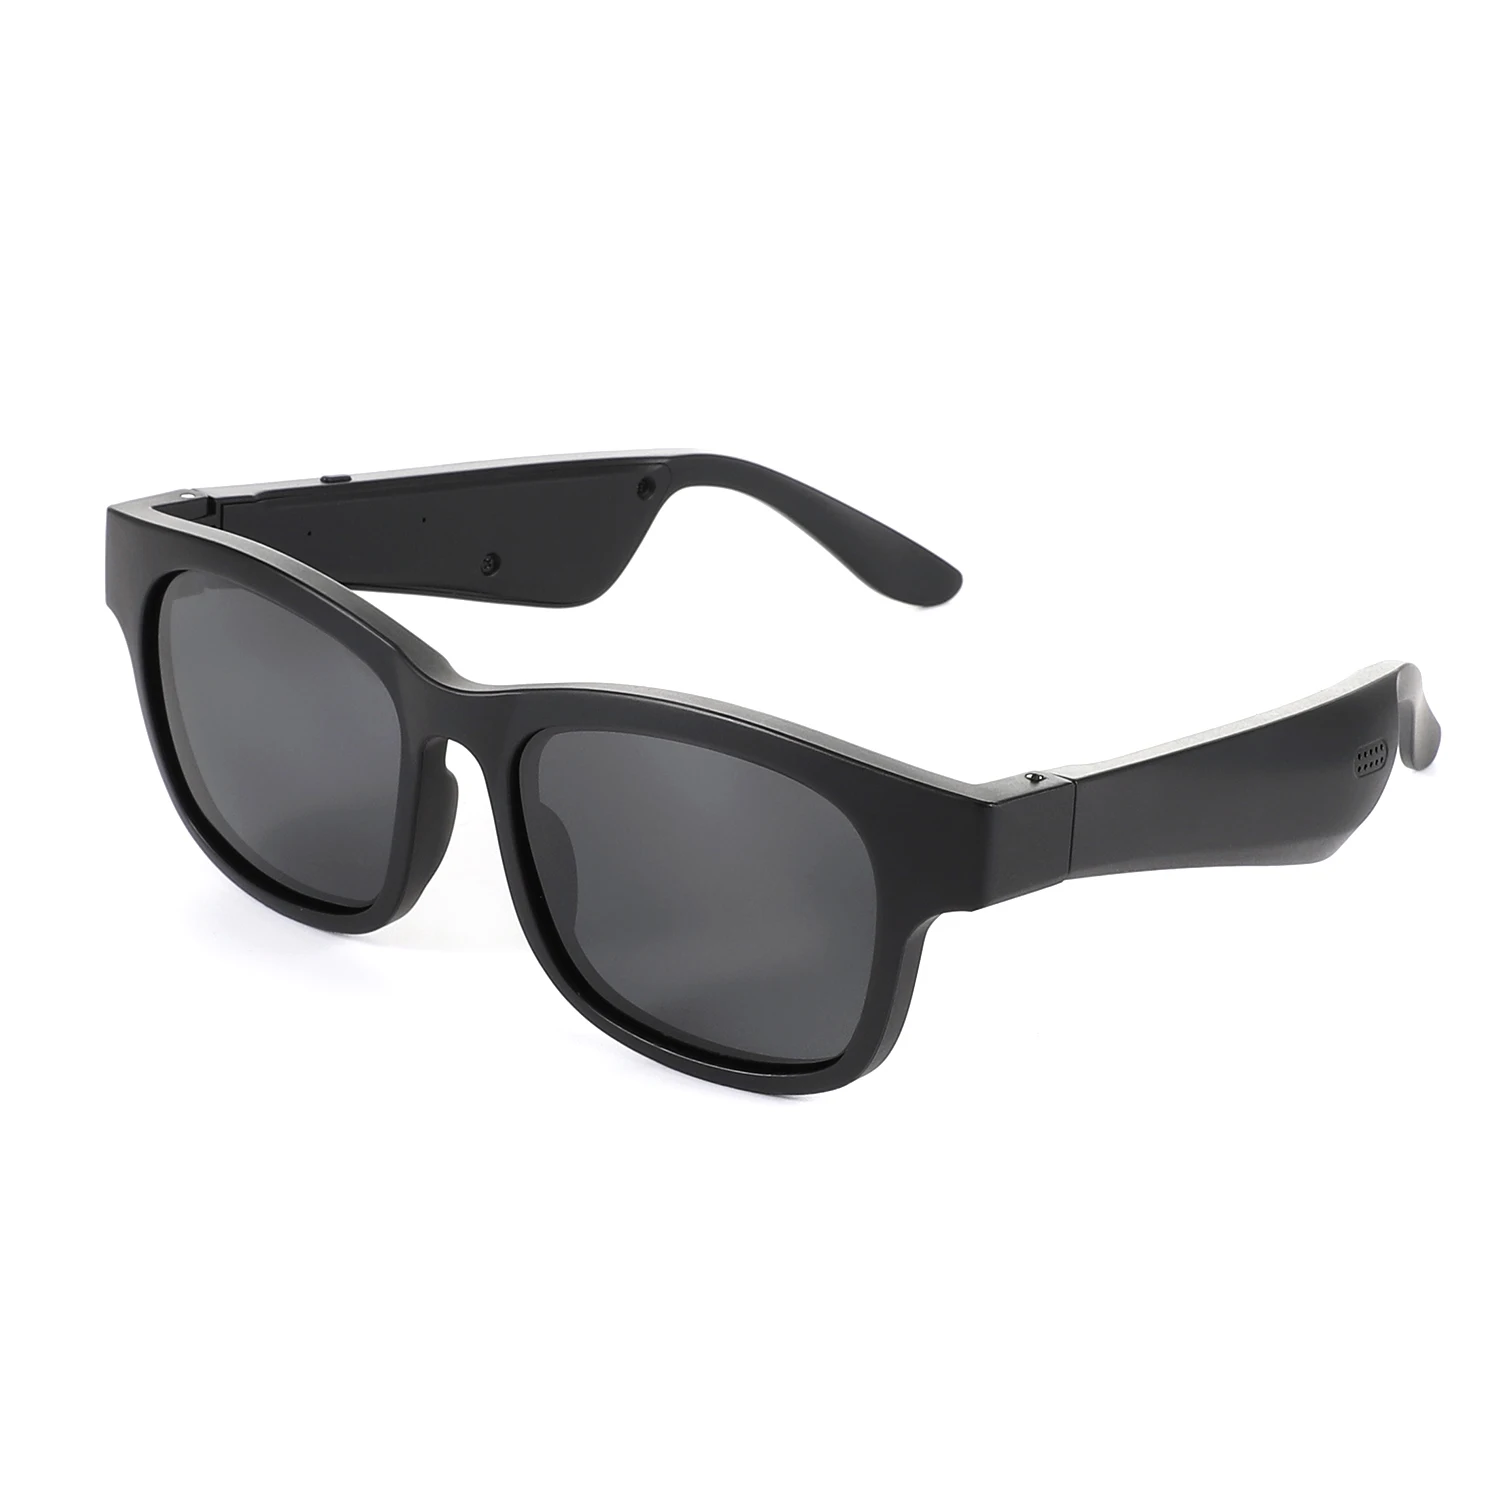 
Amazon Hot selling Sunglasses Bone Conduction Frame BT Wireless Sports Glasses Colors Sunglasses Audio Smart Glasses 